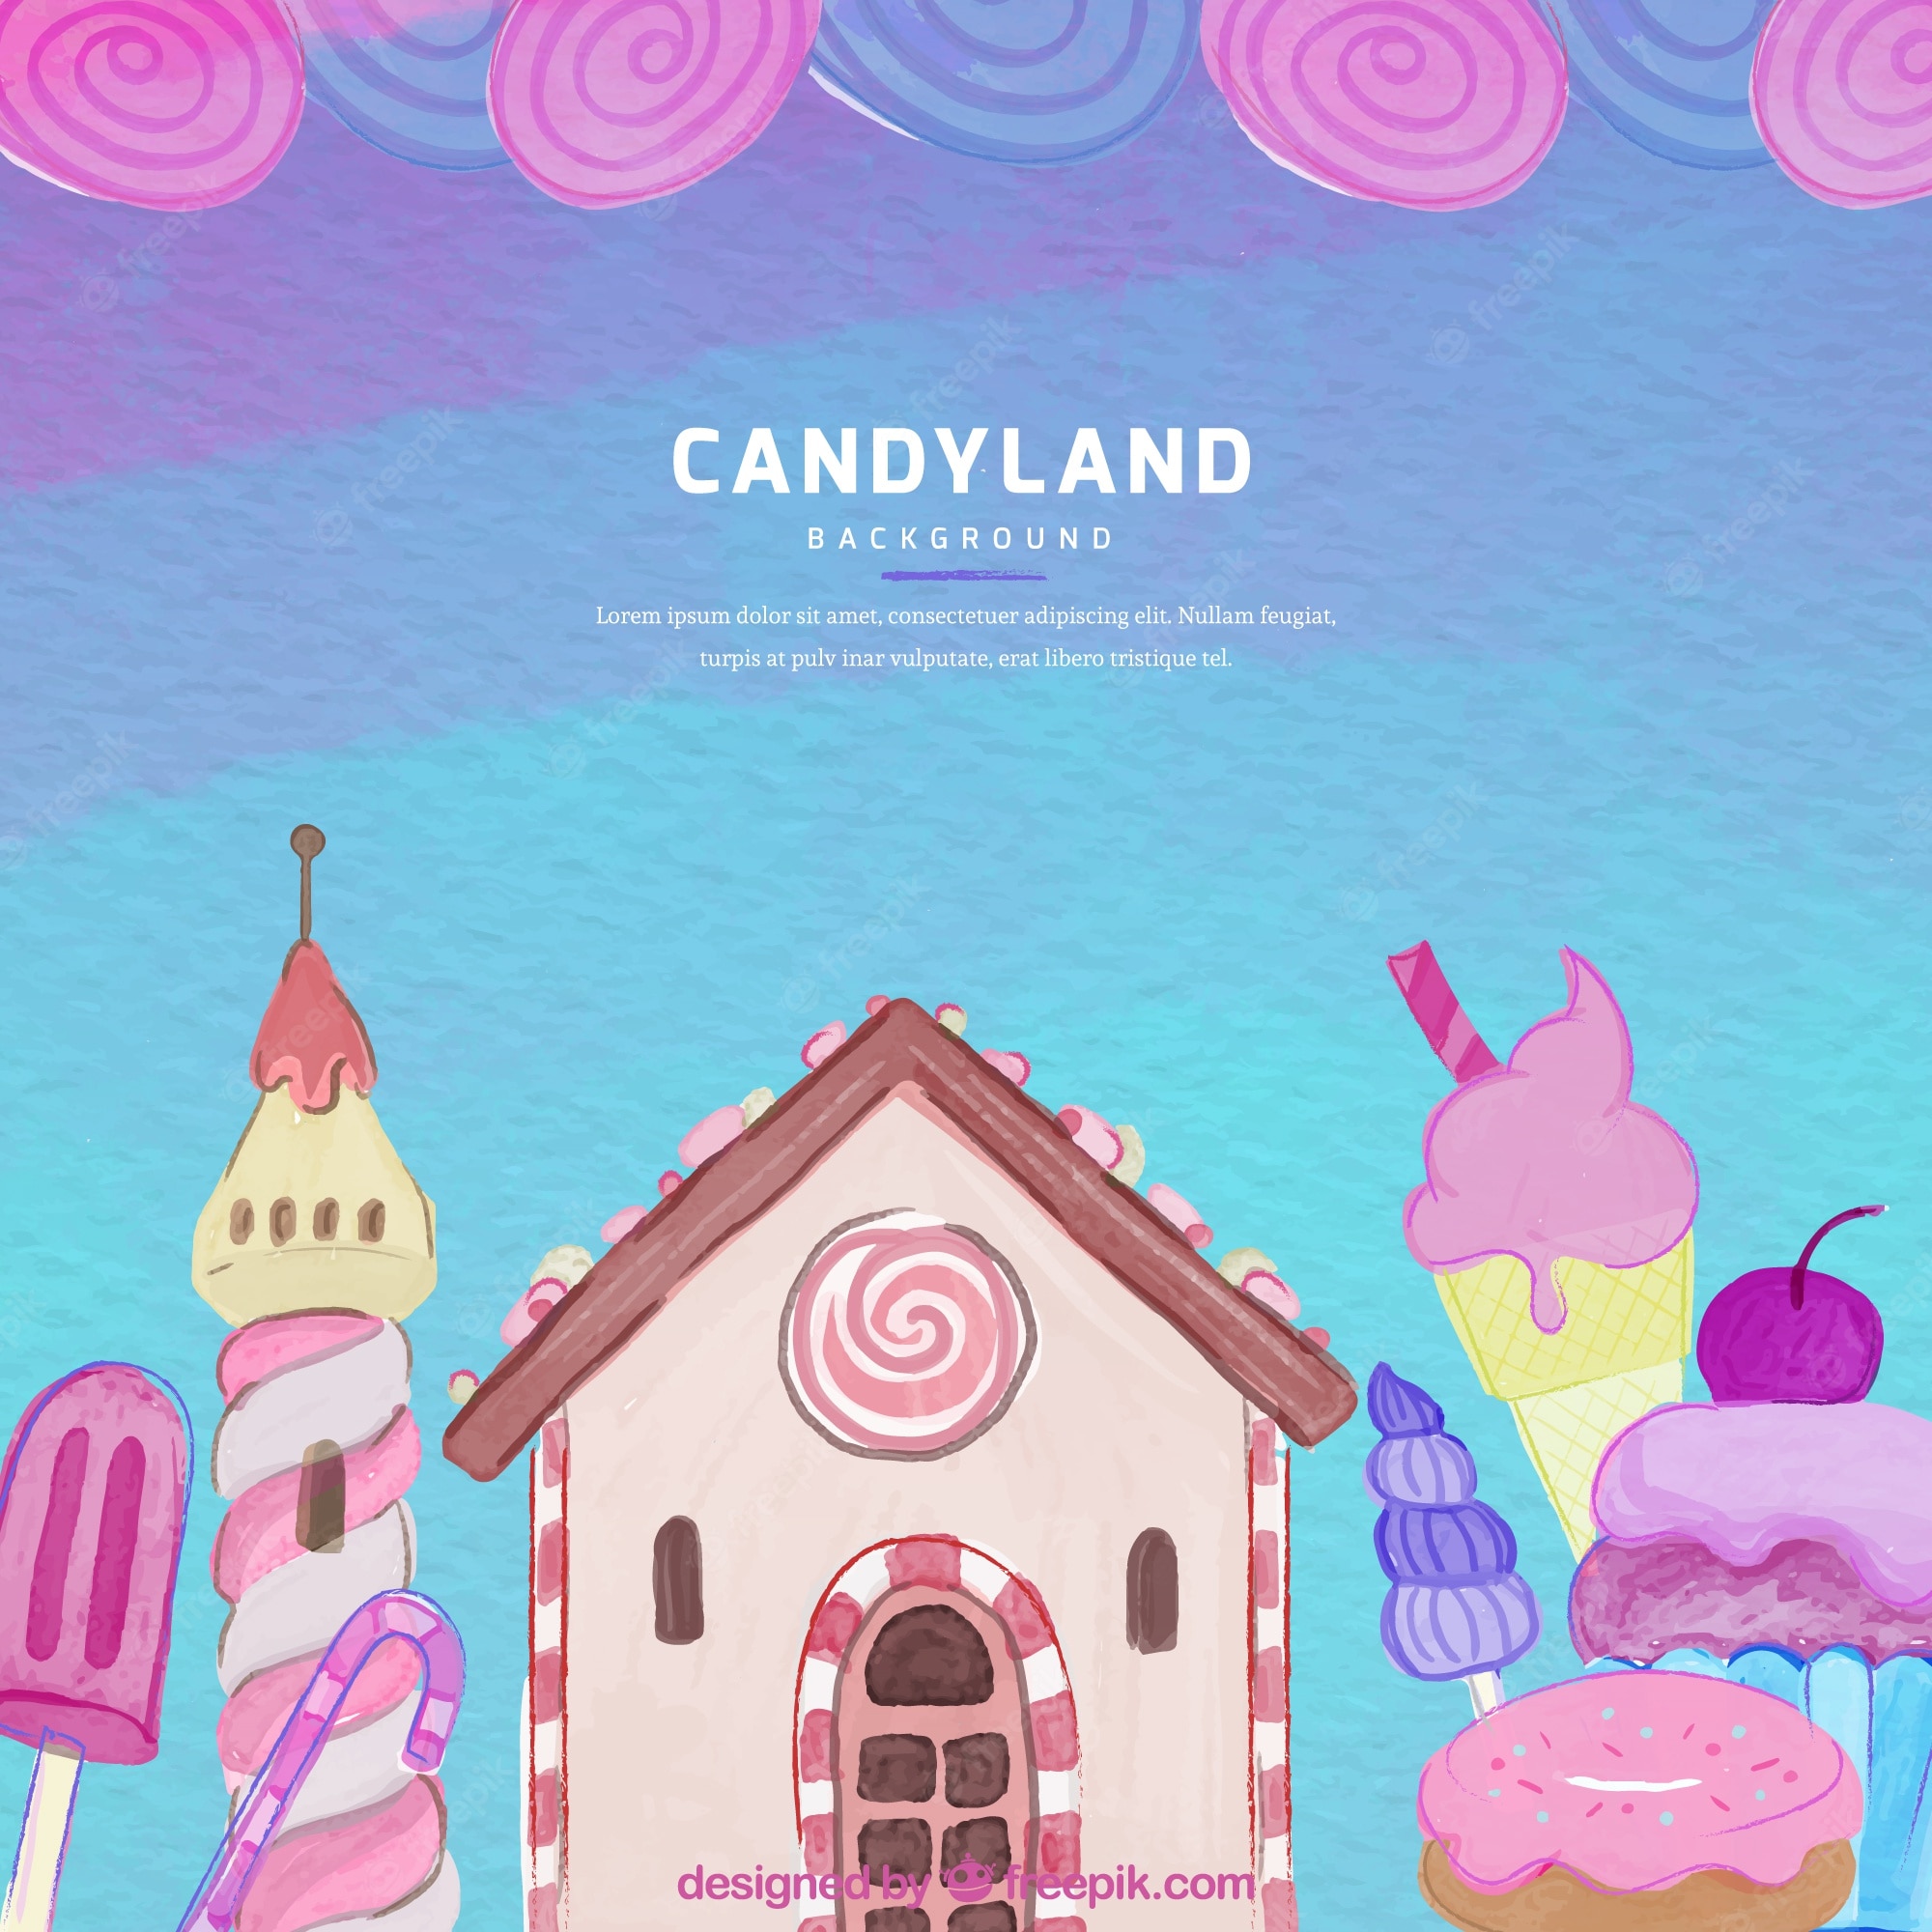 Rainbow candy land Image. Free Vectors, & PSD